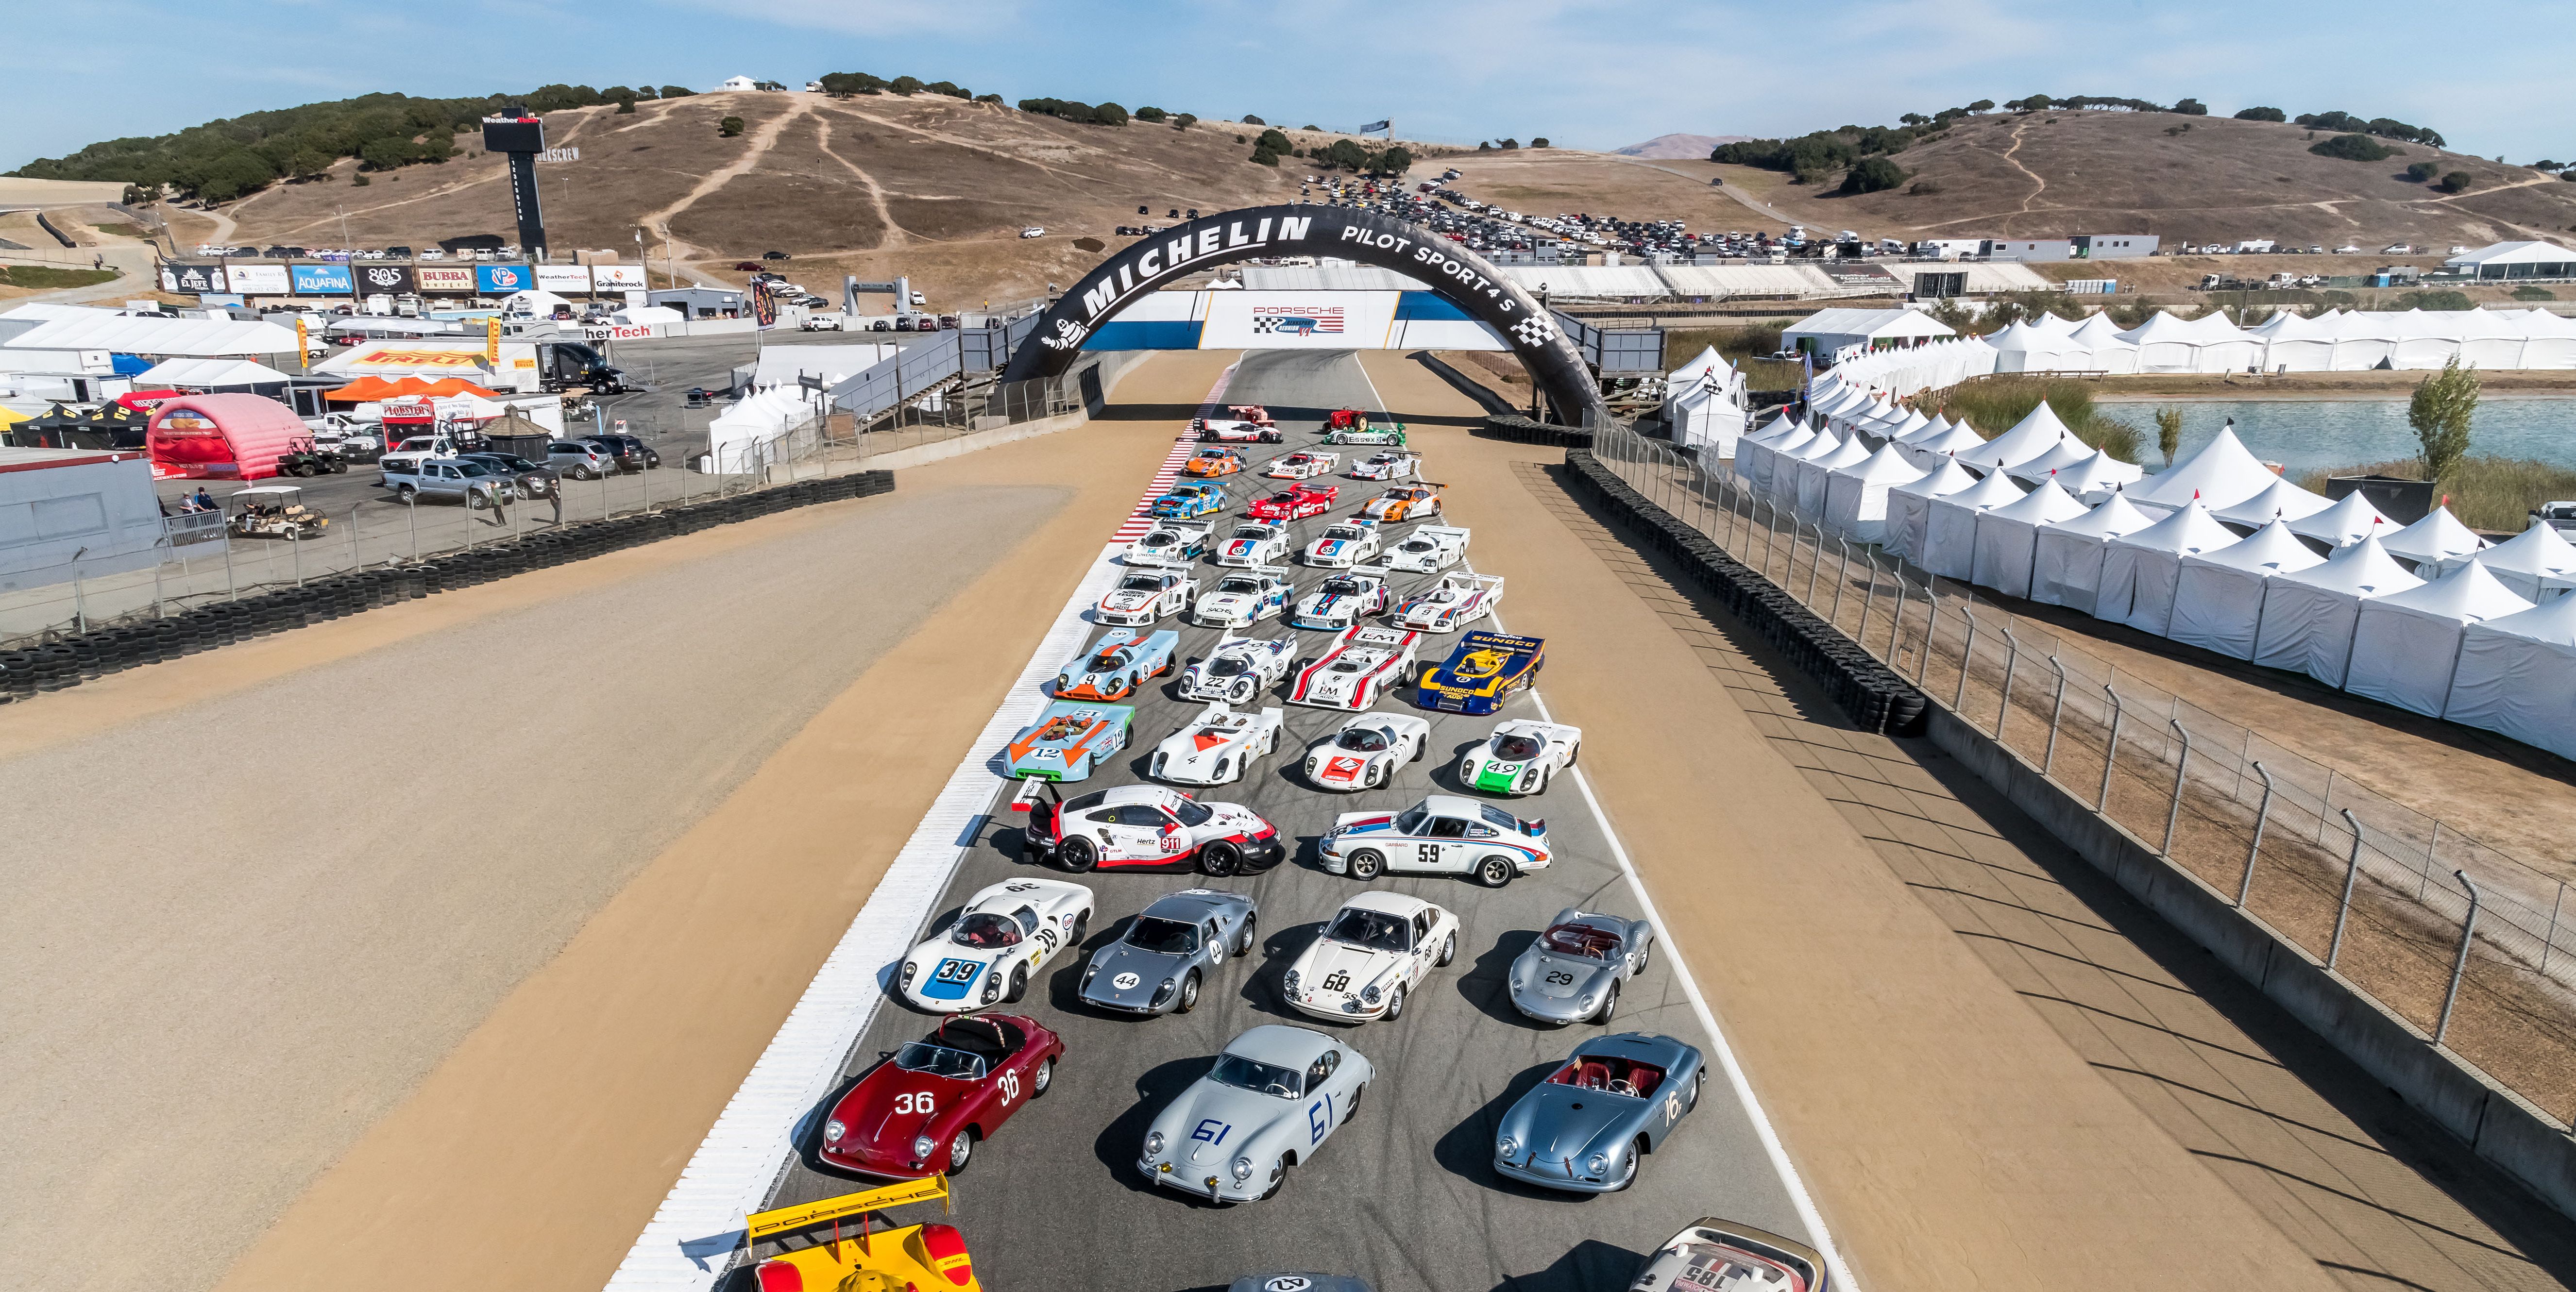 Porsche Confirms Rennsport Reunion Return to Laguna Seca in 2023